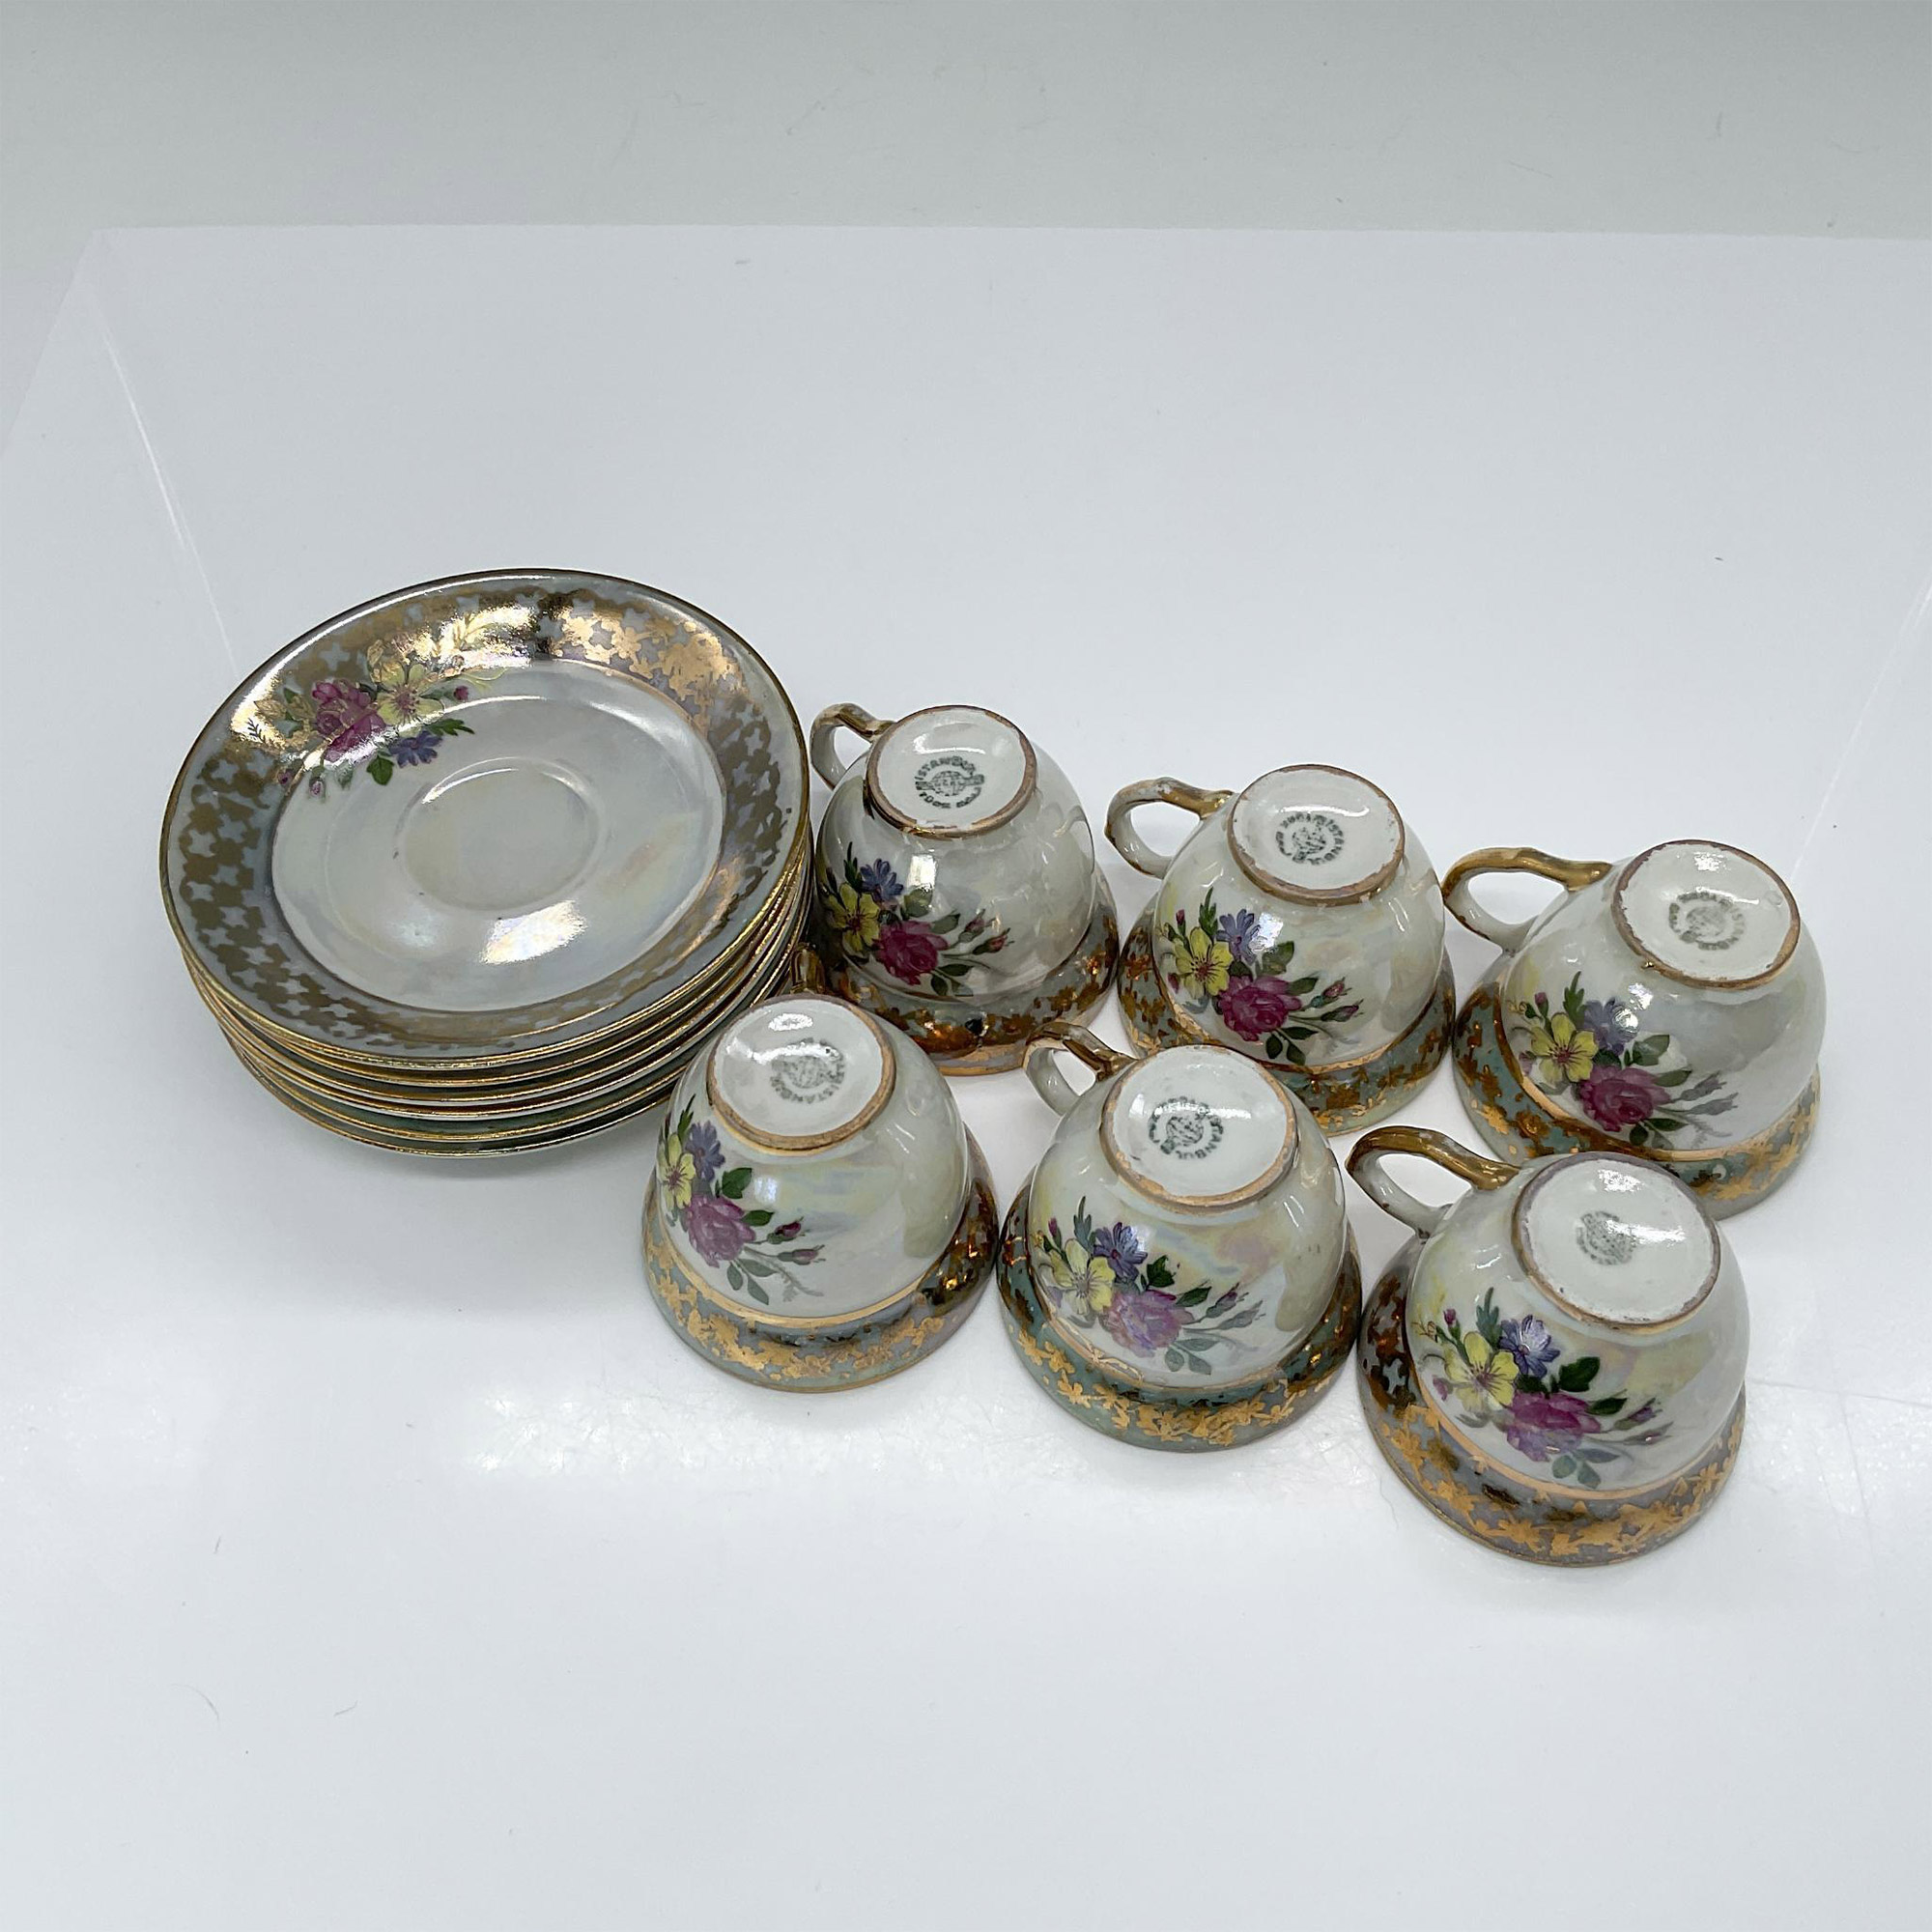 12pc Vintage Istanbul Porselen Teacups & Saucers Set - Image 3 of 3